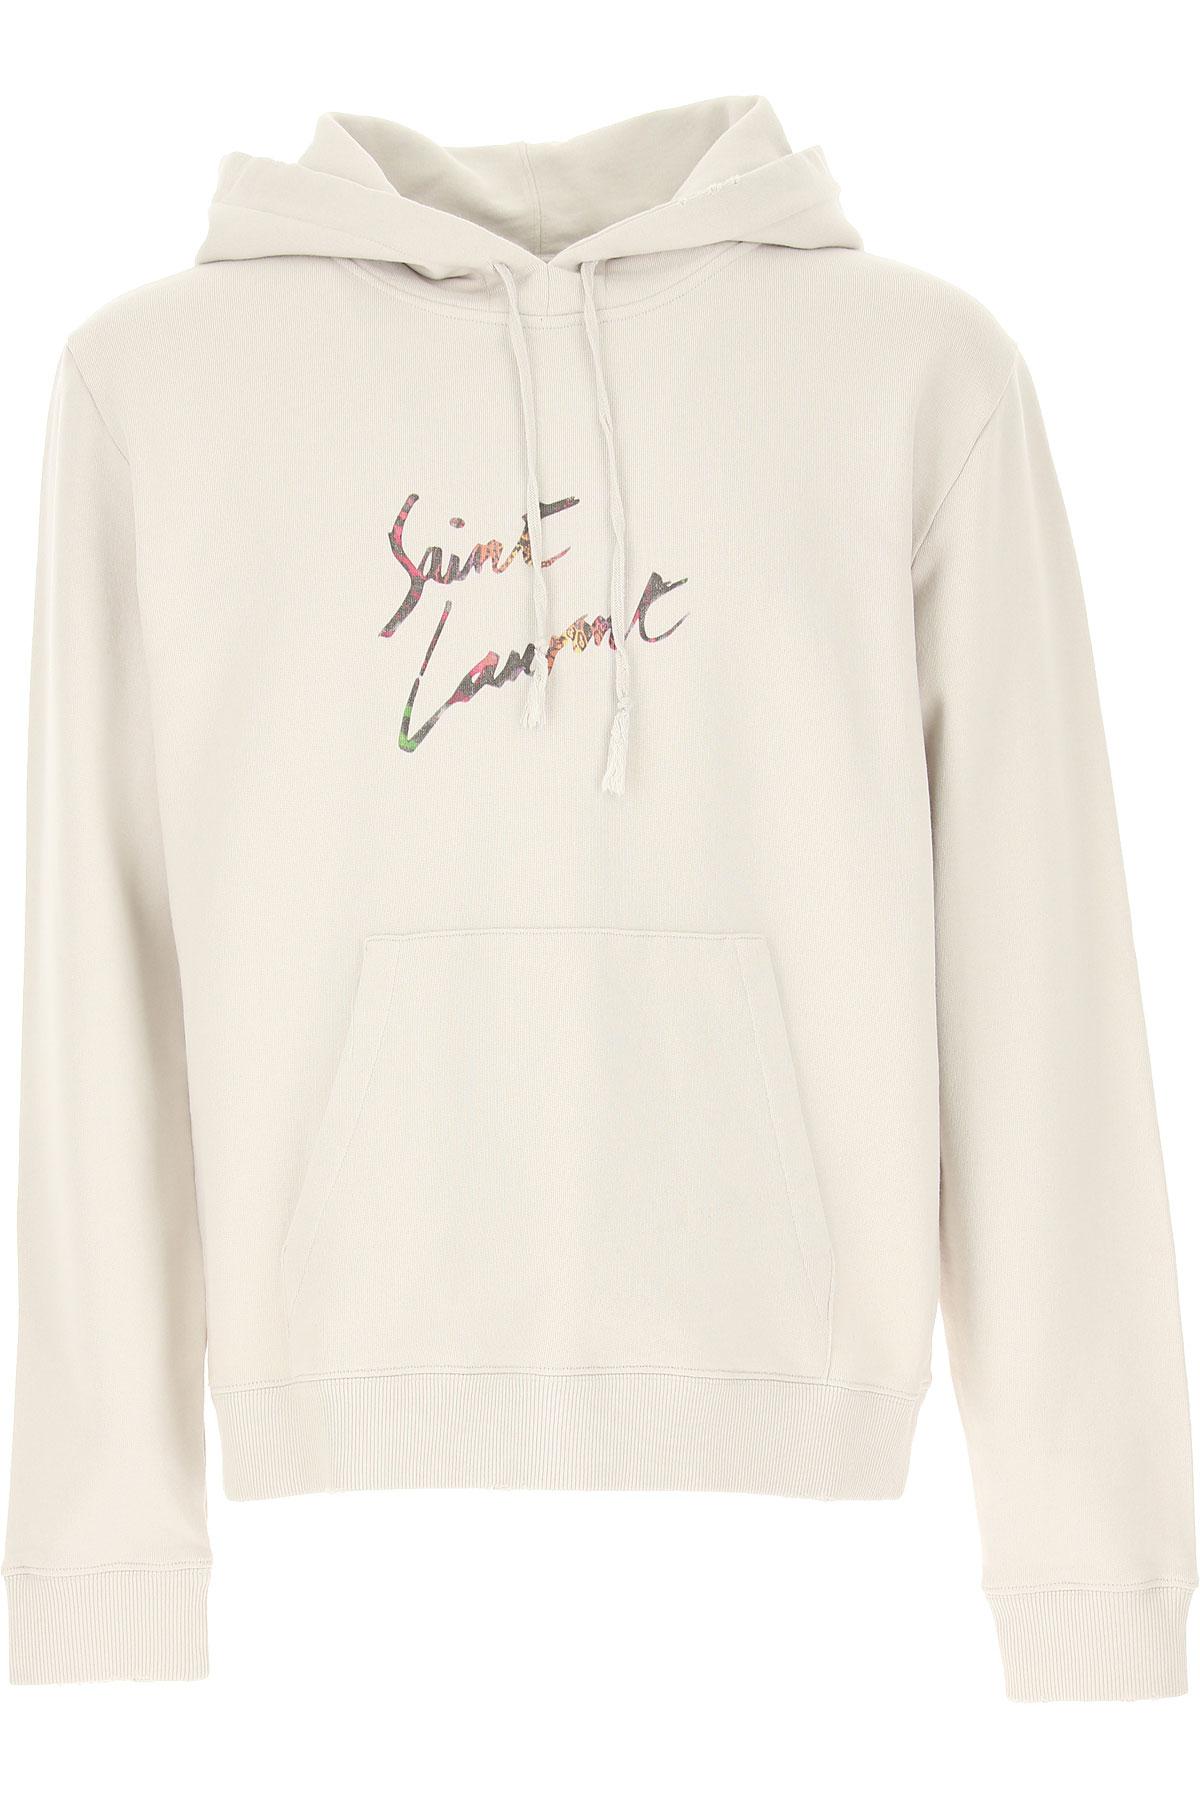 Saint Laurent Cotton Sweatshirt For Men On Sale in Ecru (Natural) for ...